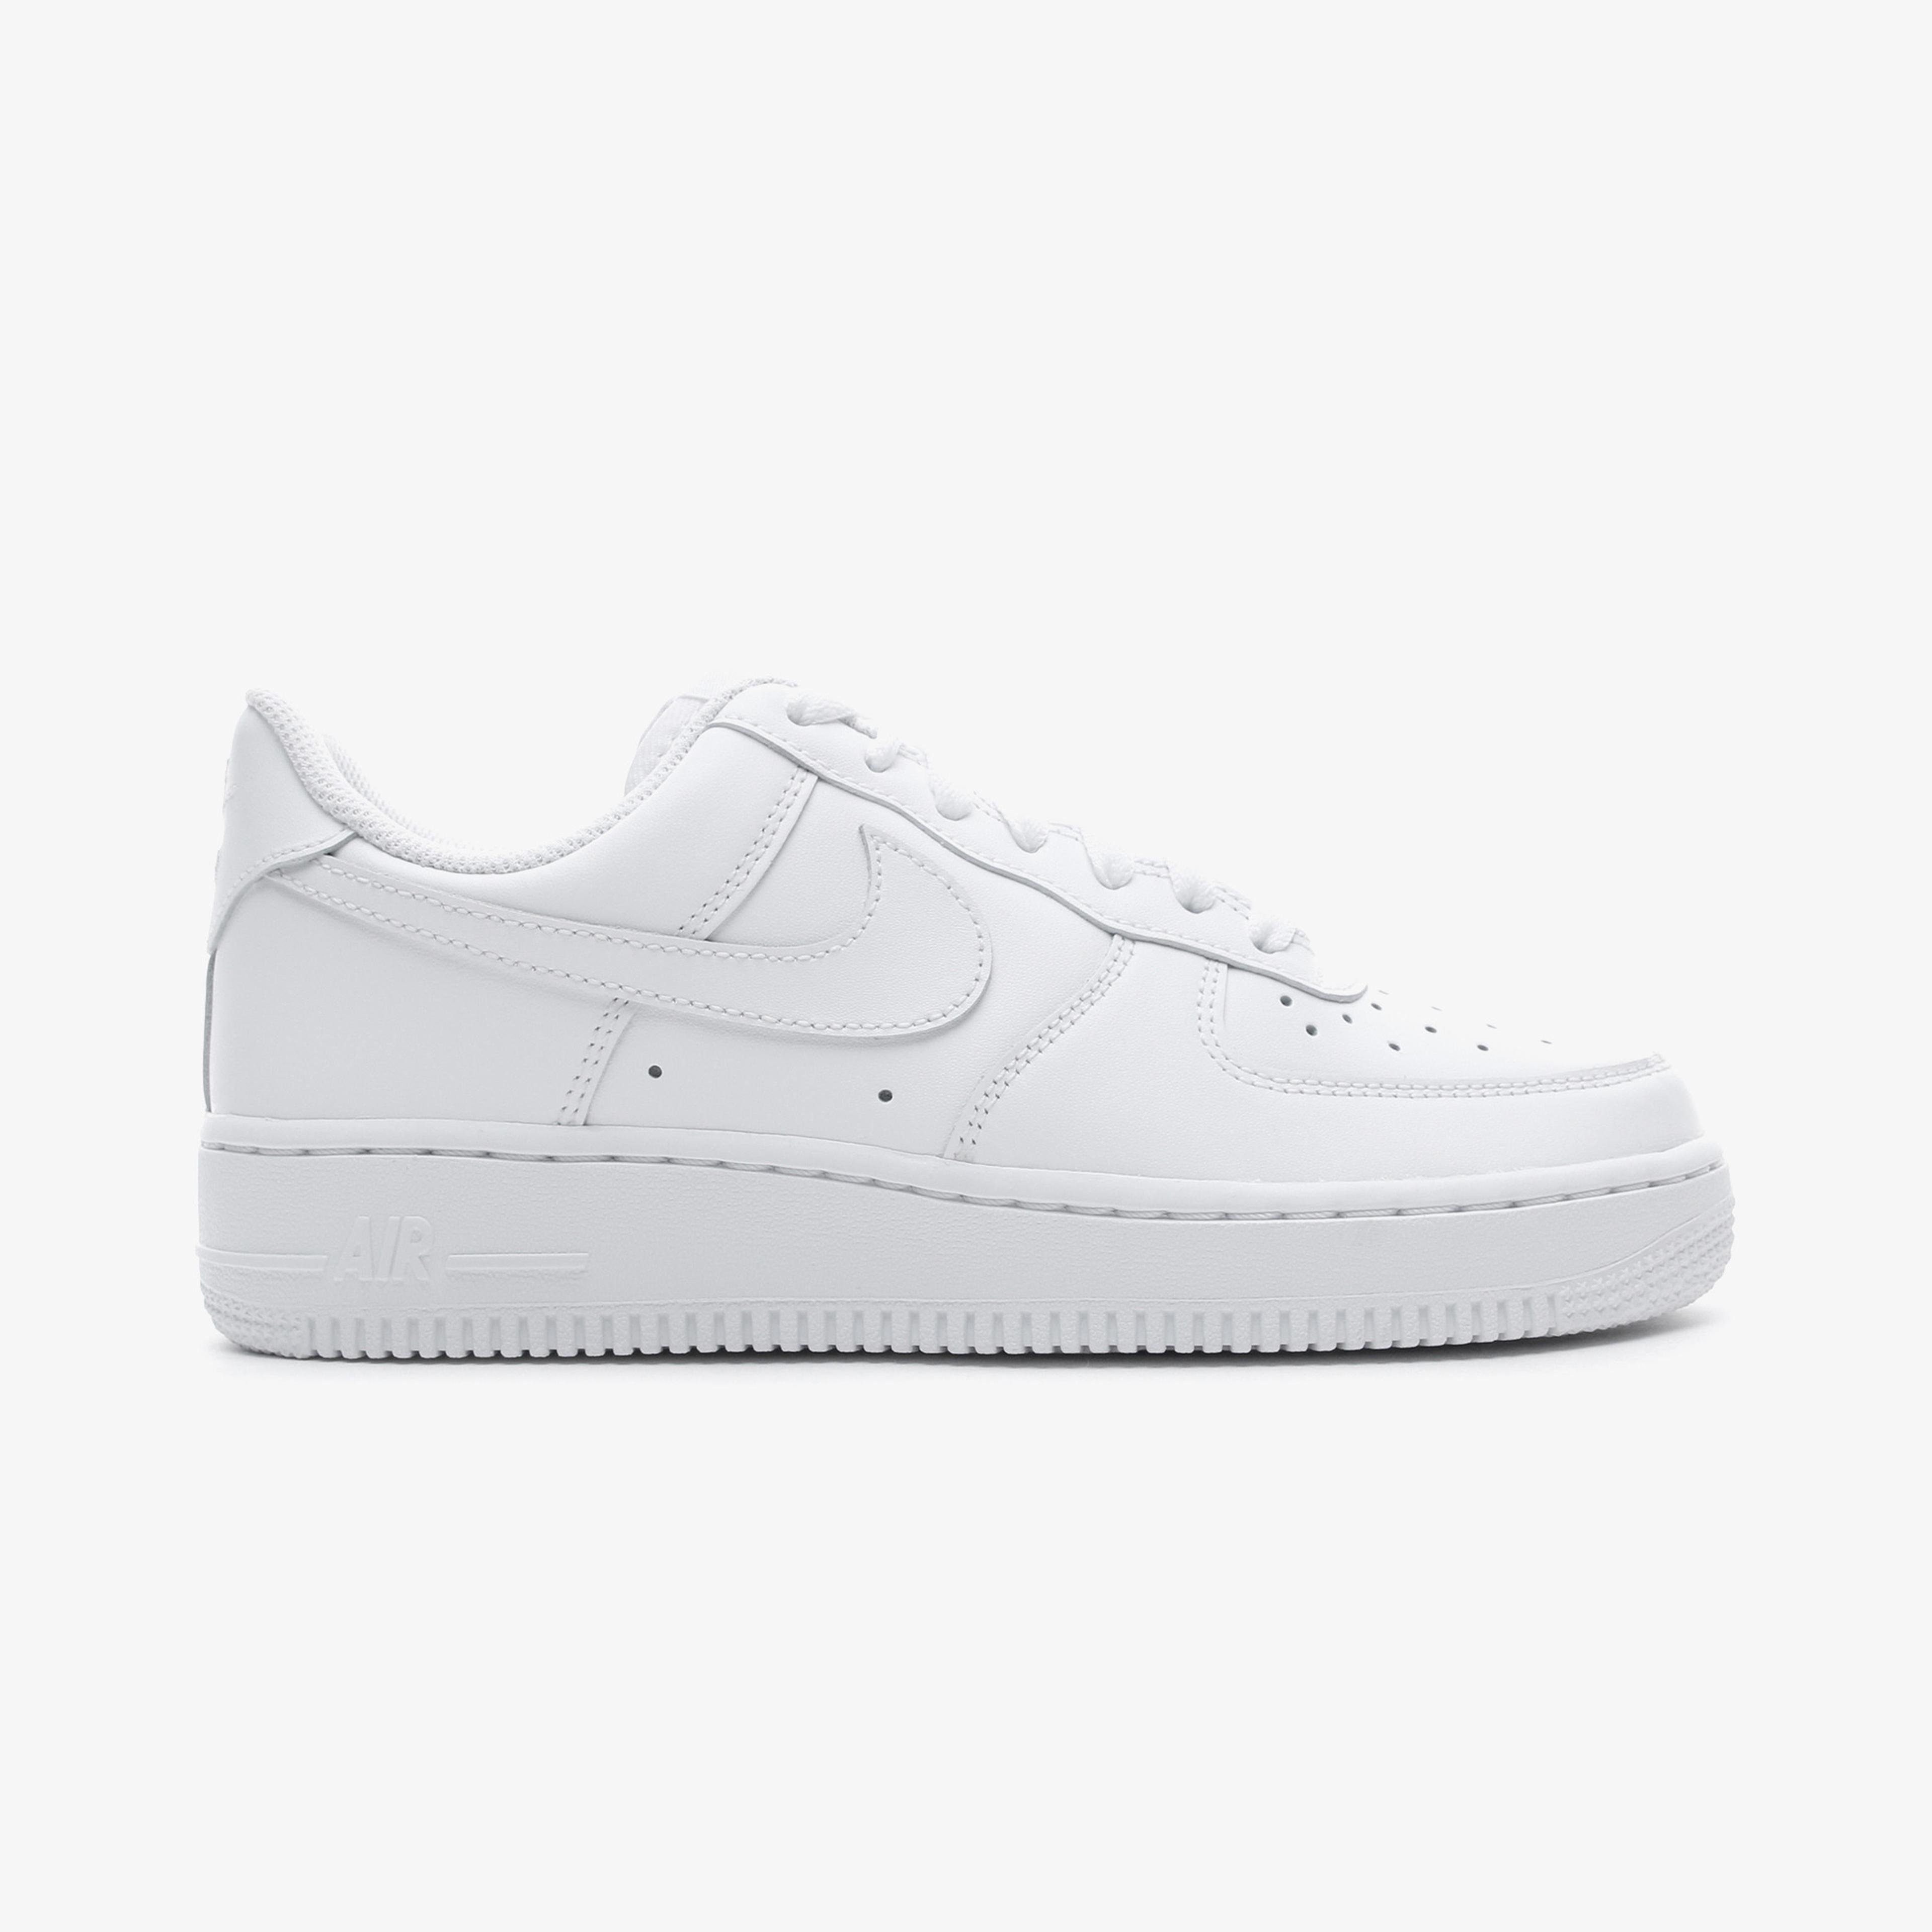 Nike Air Force 1 '07 Kadın Beyaz Sneaker